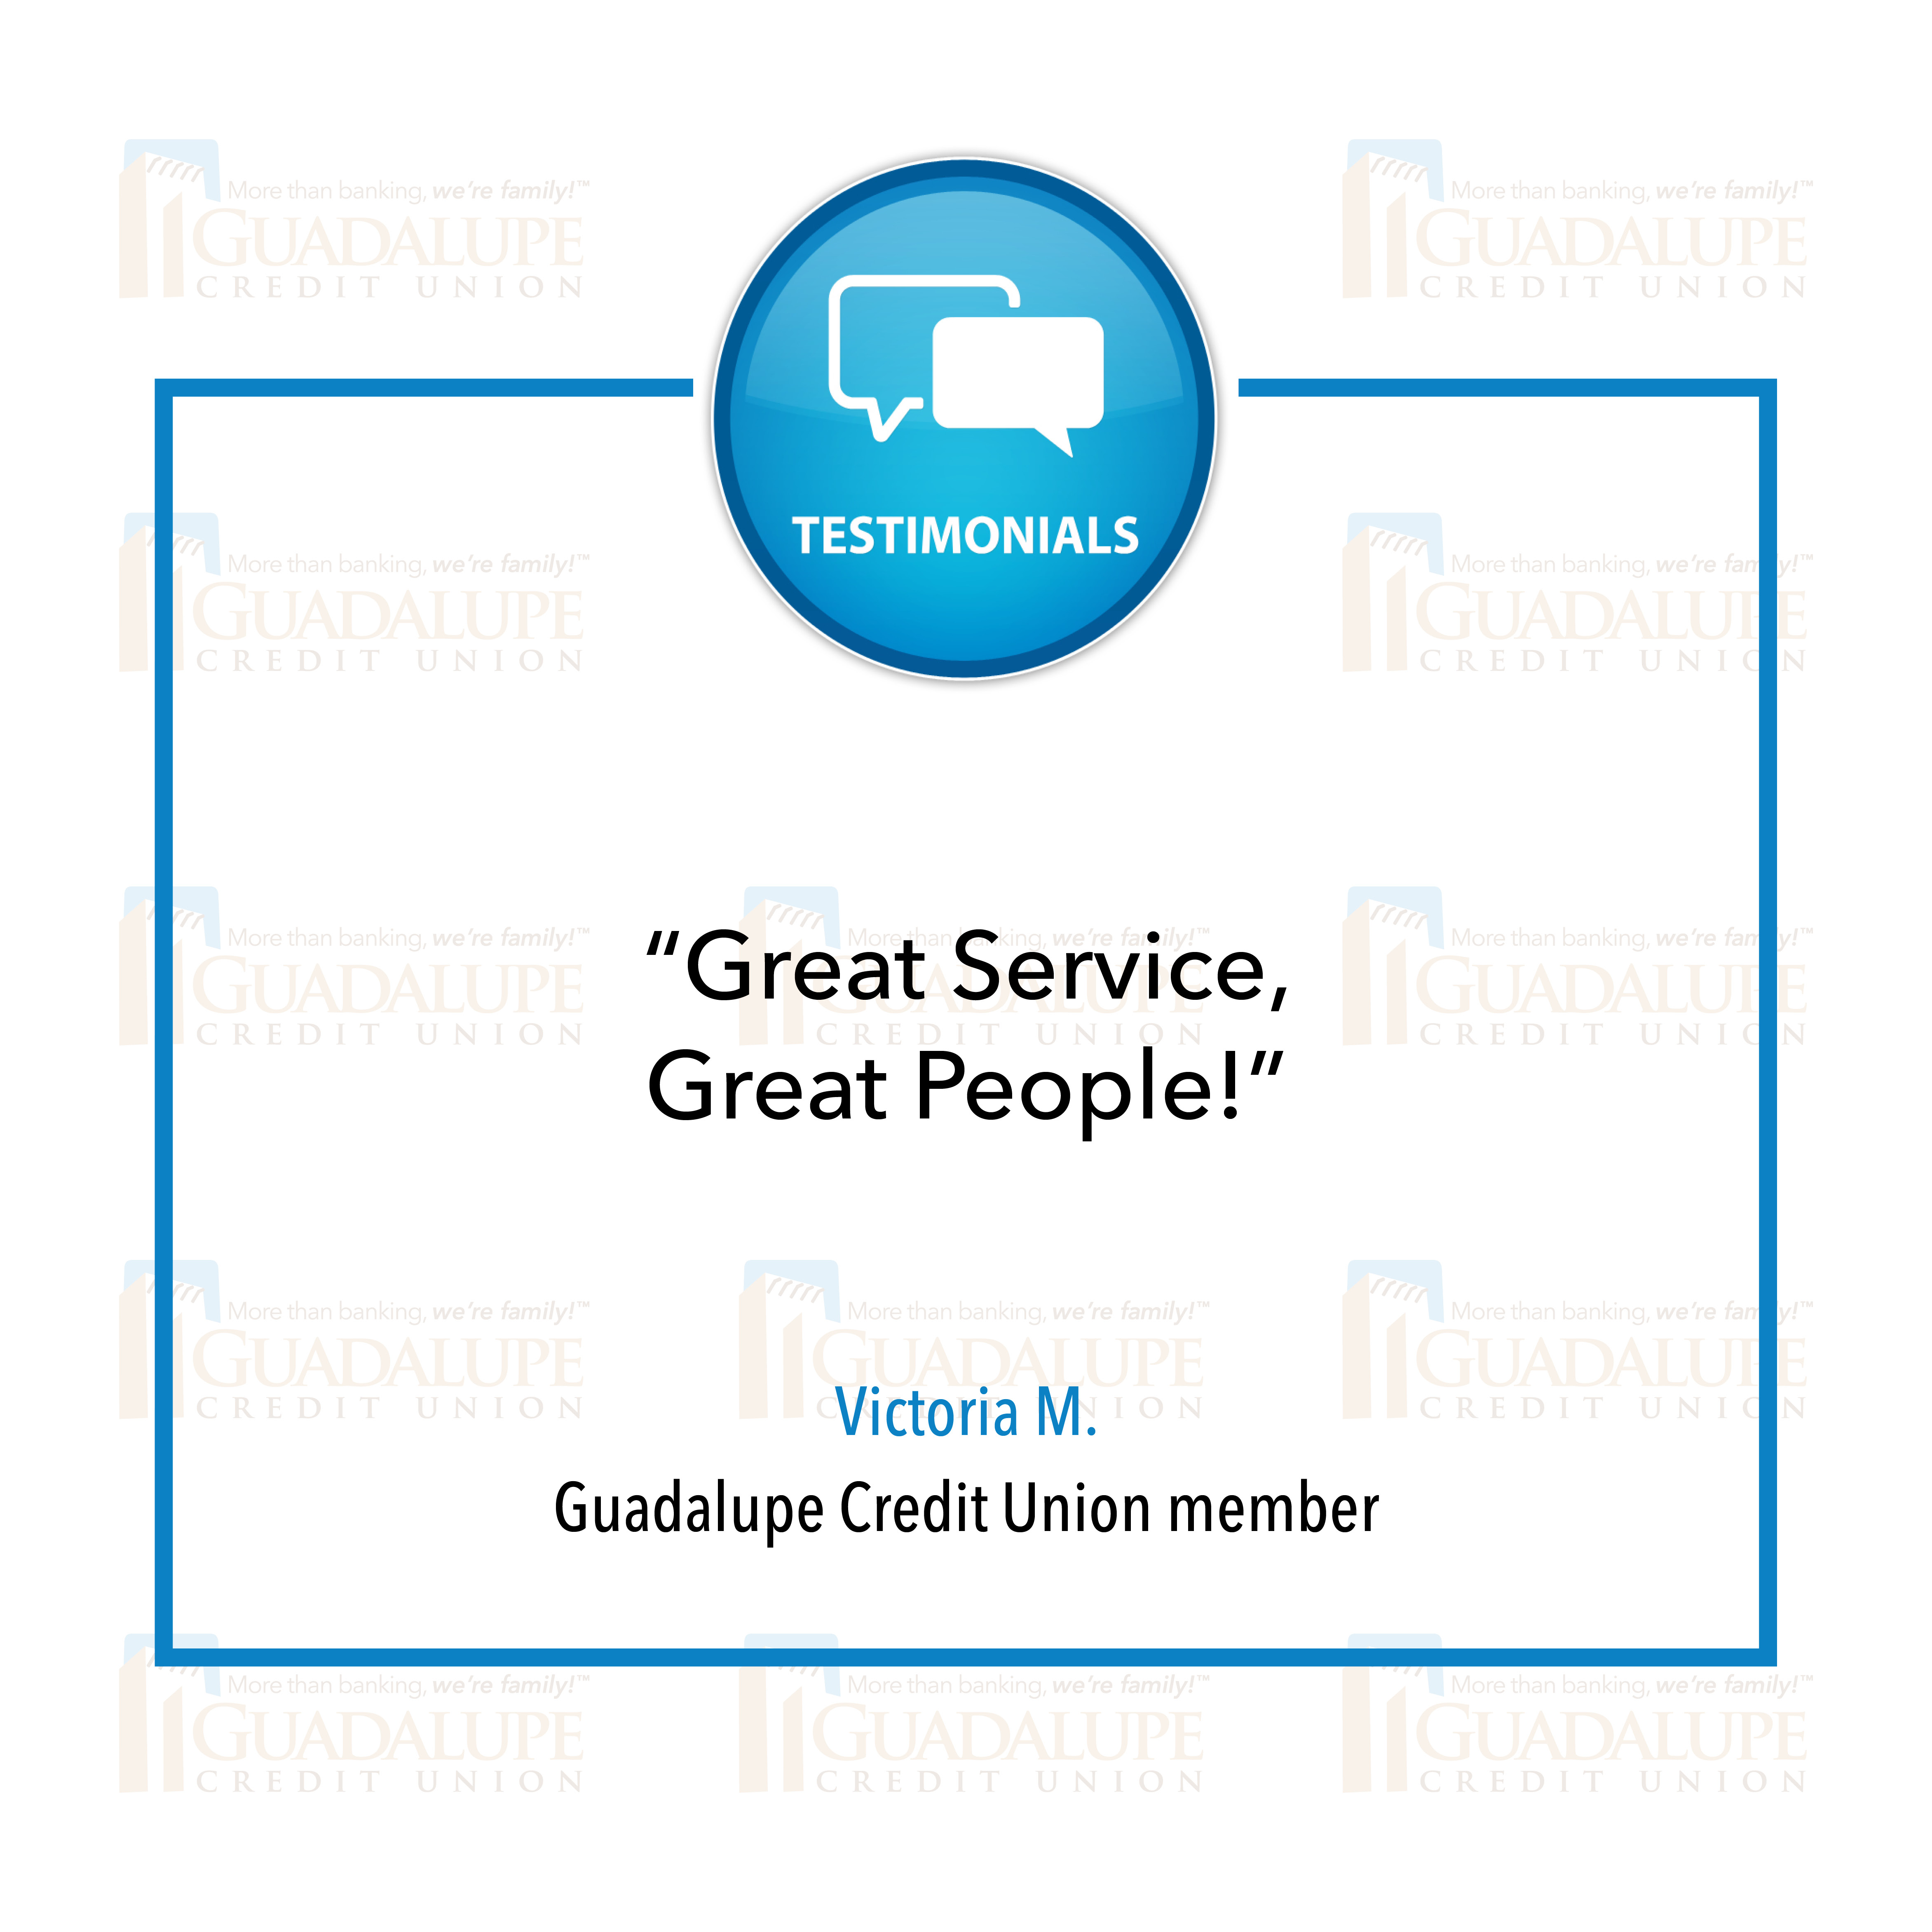 Member Testimonial - "Great Service, Great People."